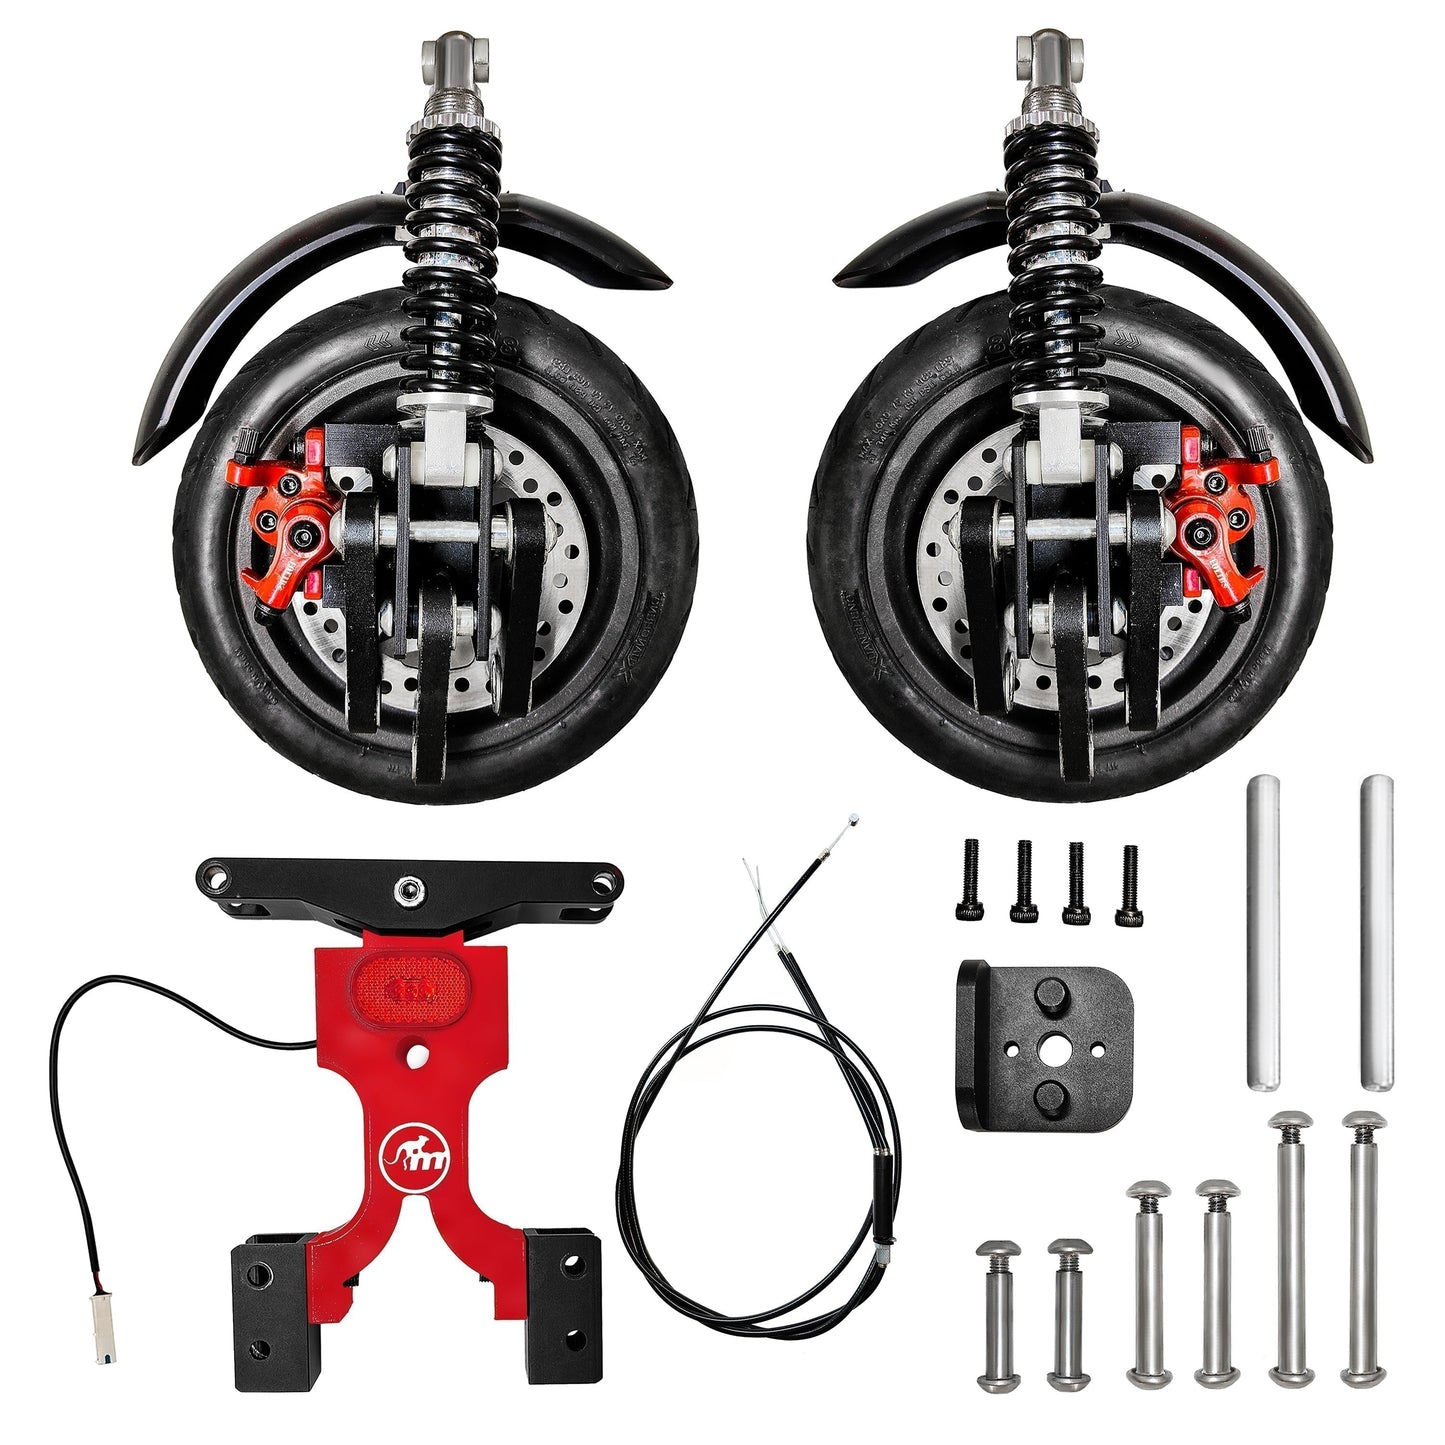 Monorim X3 upgrade kit to be Three wheels special for vivobike s2max frames